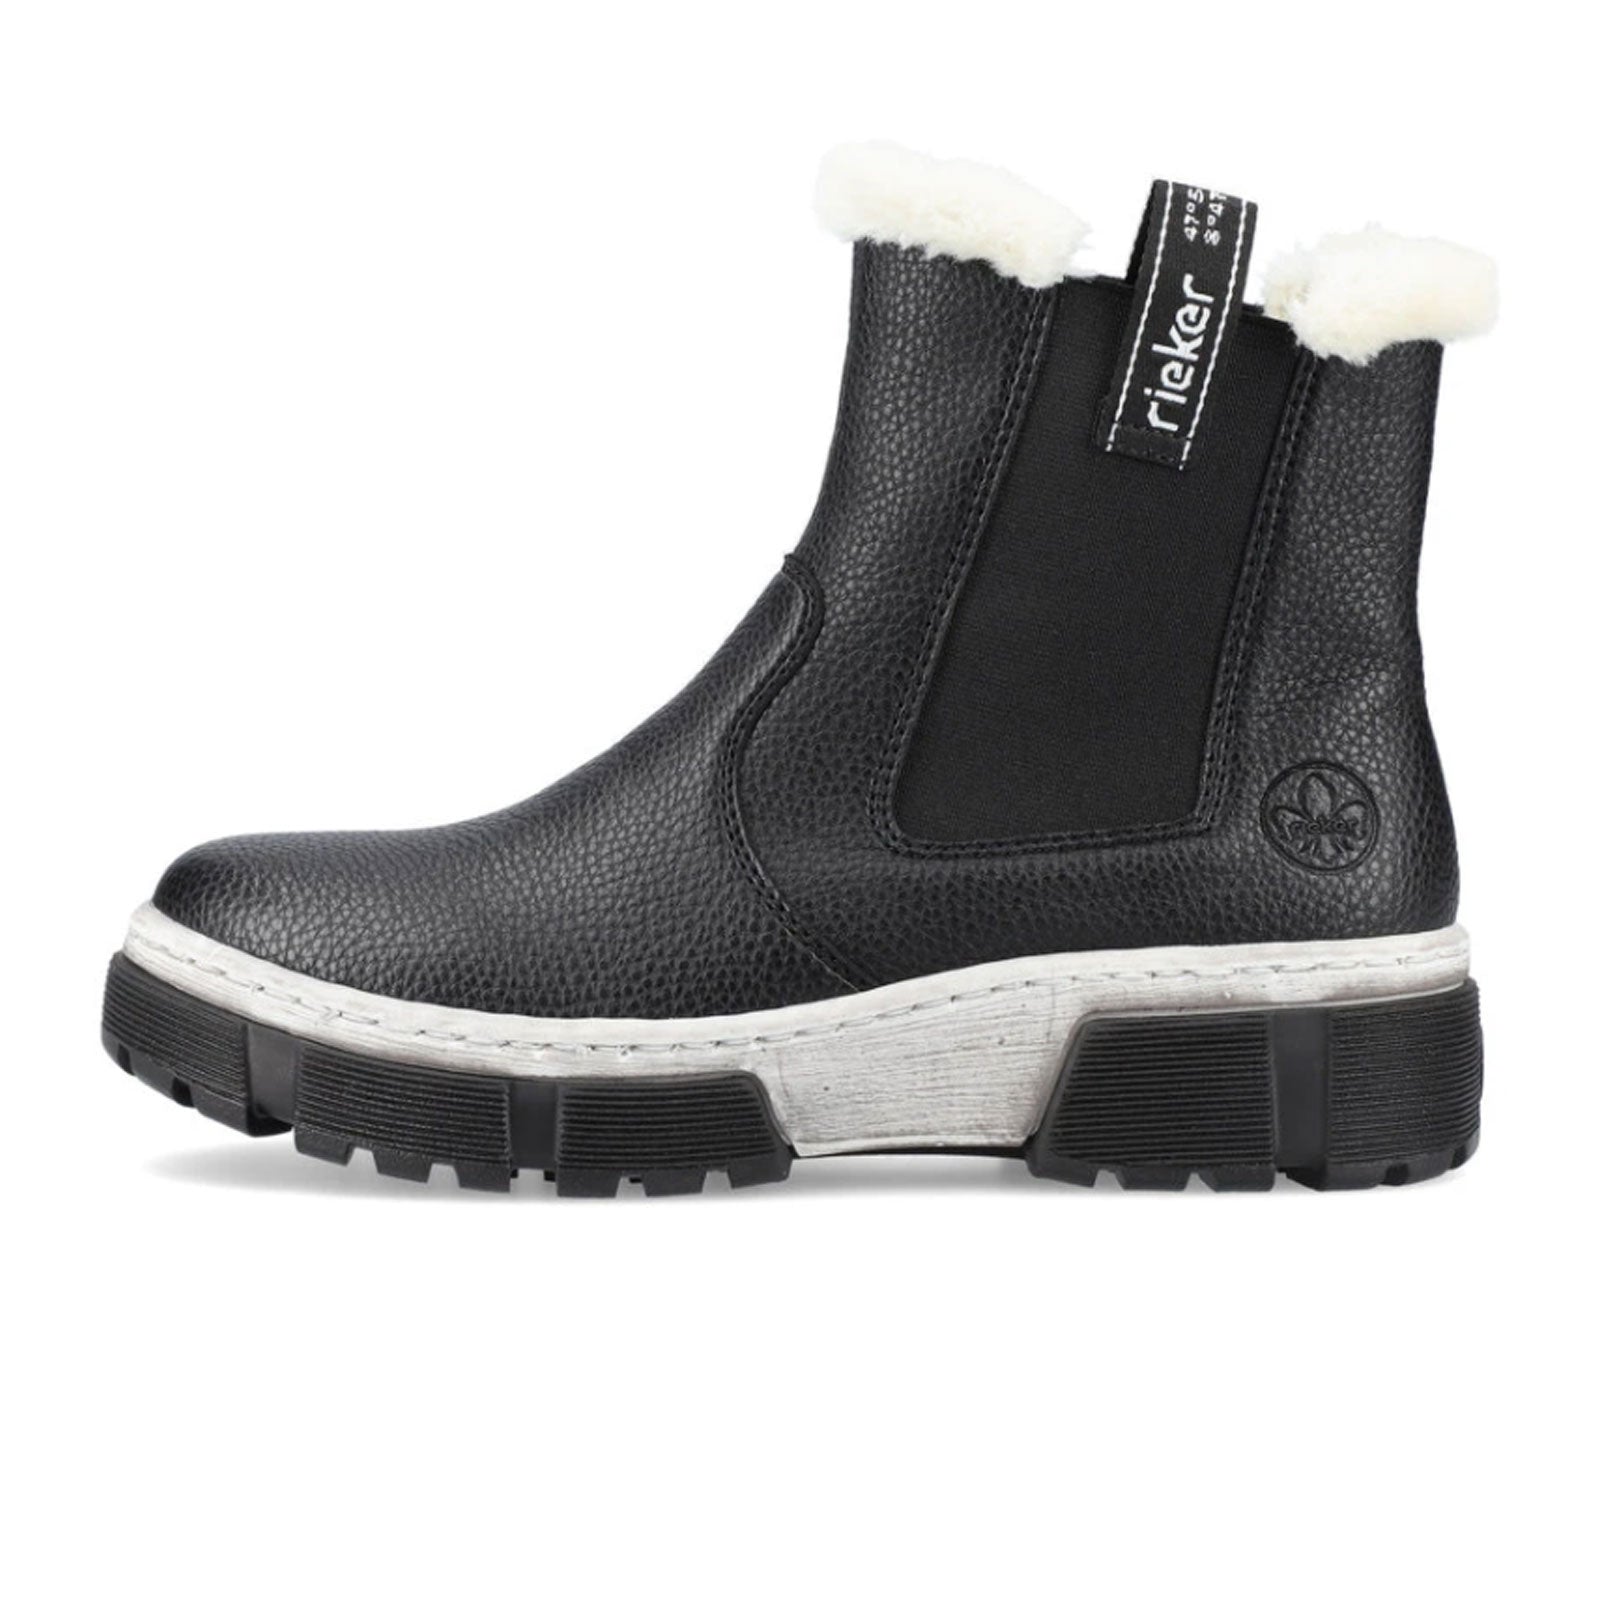 Rieker X8688 (Women) - Schwarz/Bianco/Schwarz Boots - Fashion - Ankle Boot - The Heel Shoe Fitters